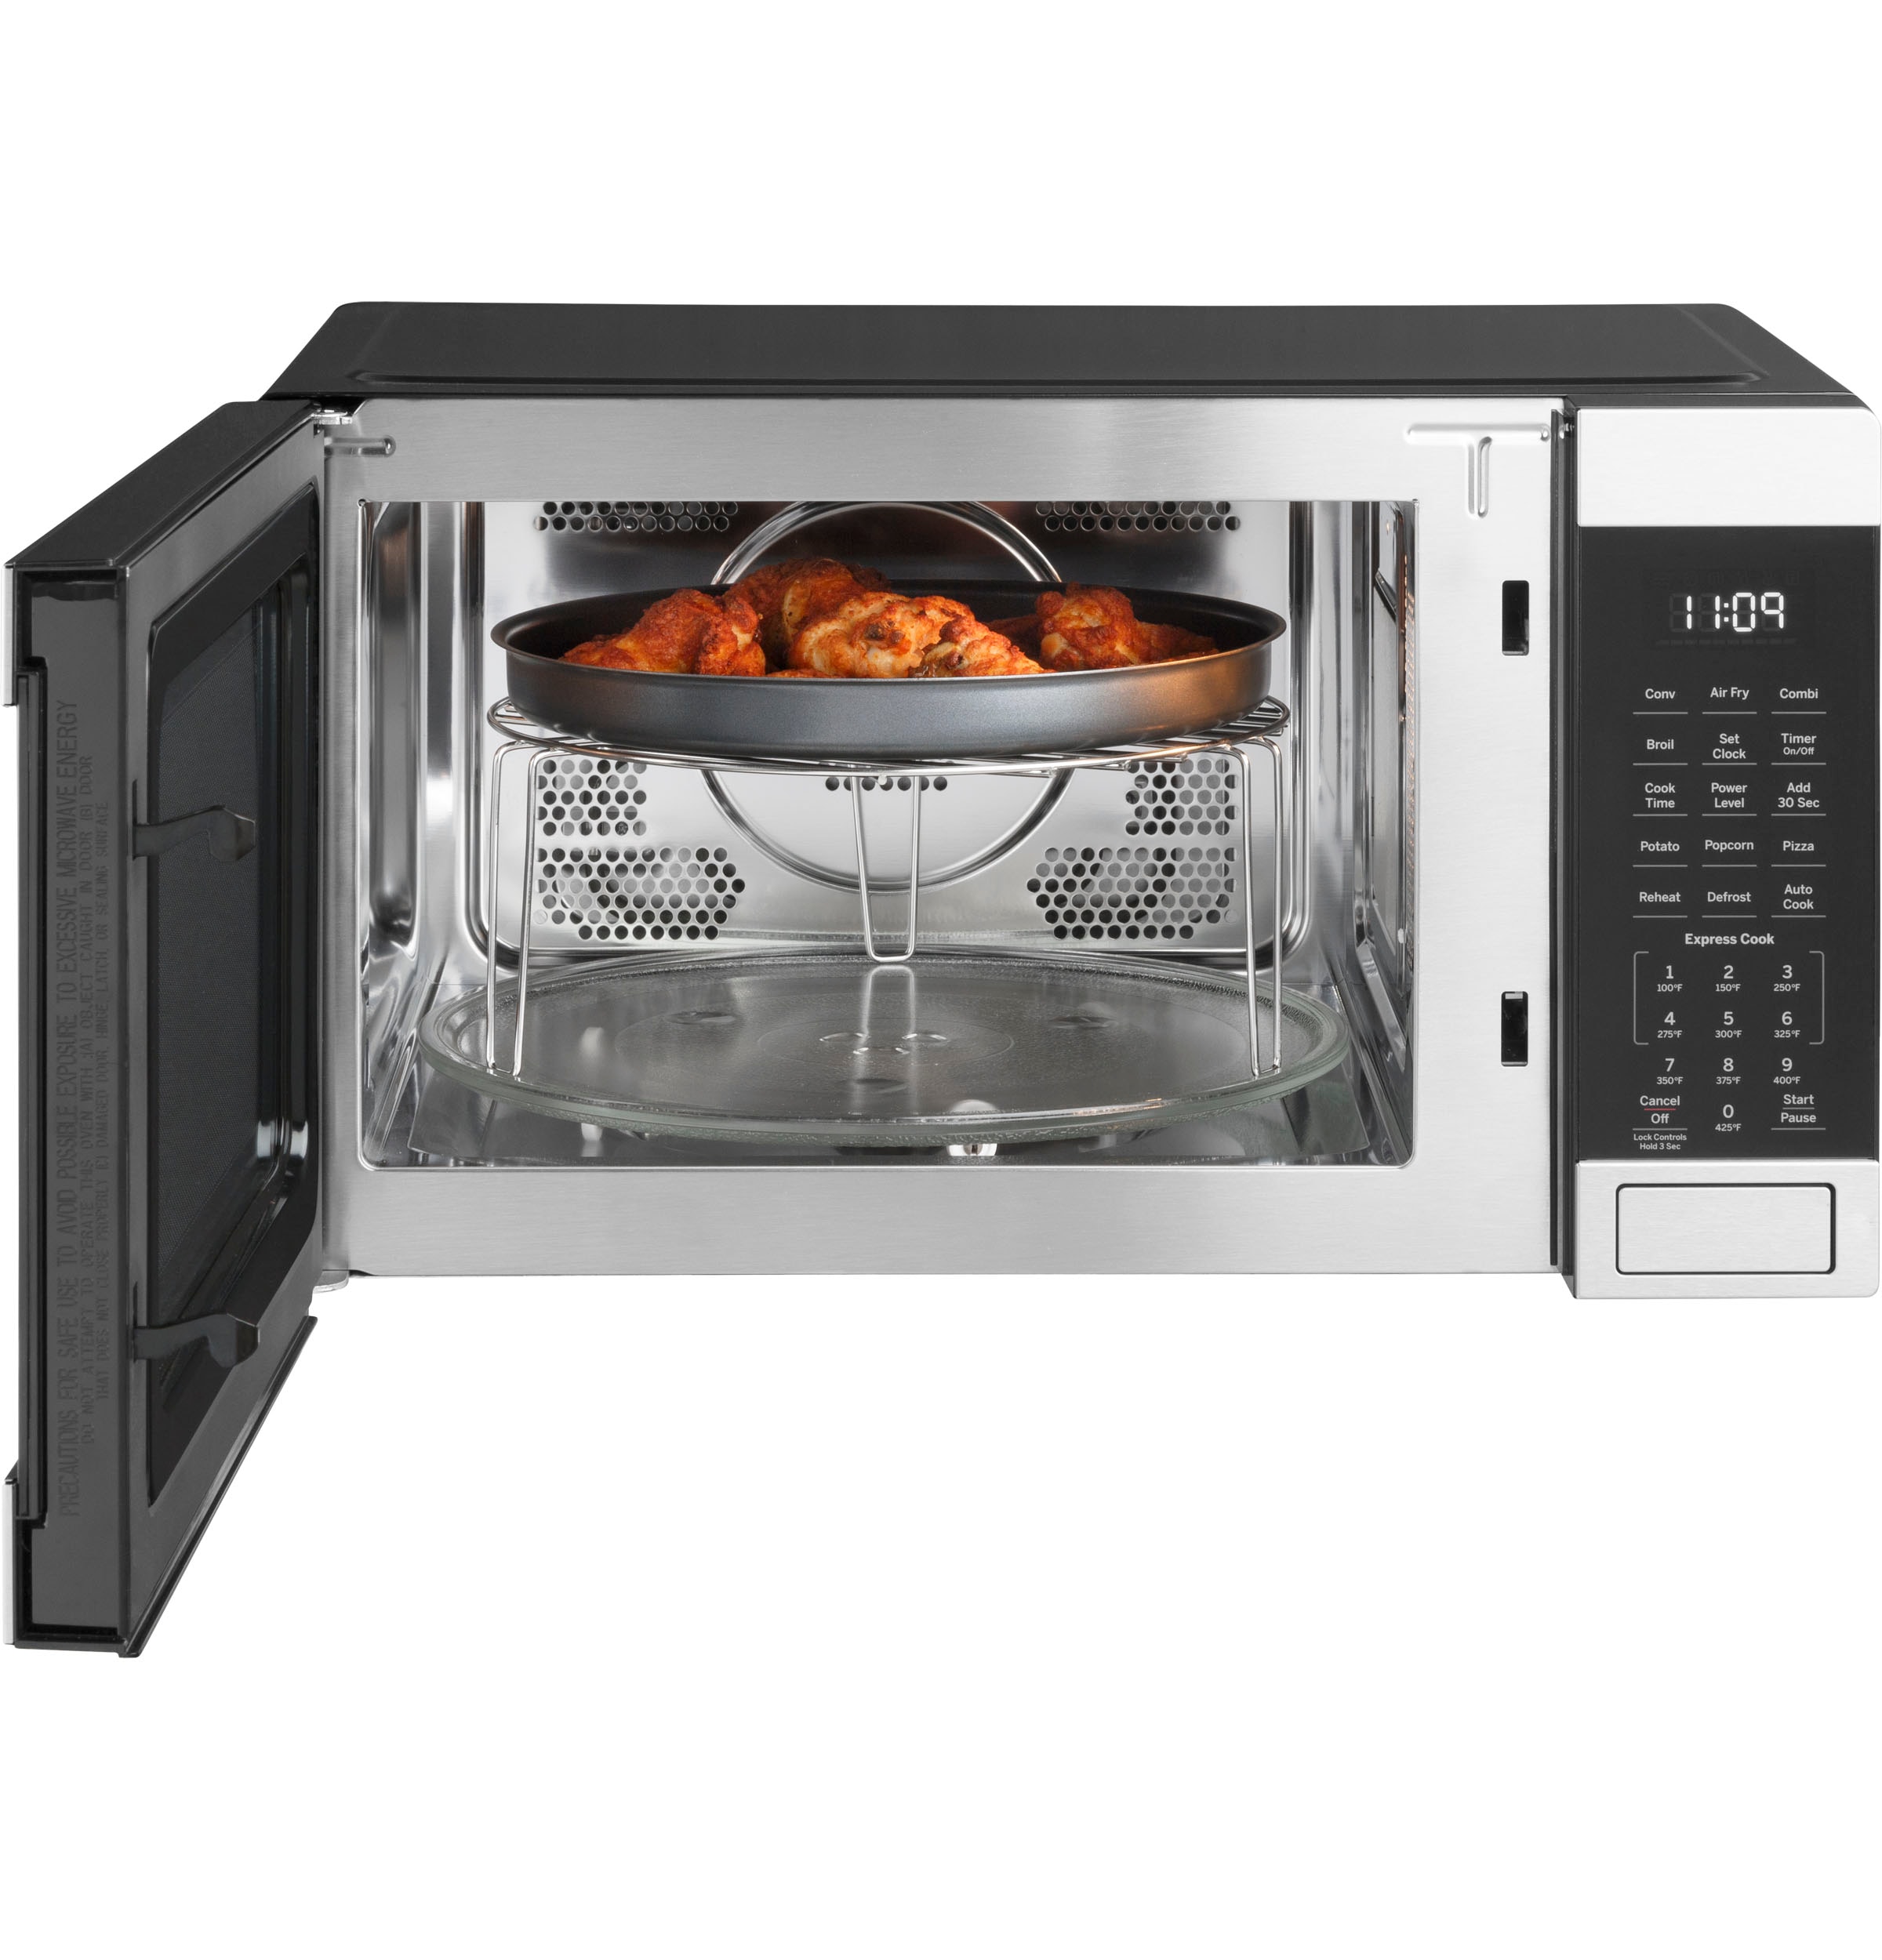 1.5 cu. ft. in Stainless Steel 1000 Watt Countertop Microwave Oven with Air  Fryer, Convection, Smart Sensor